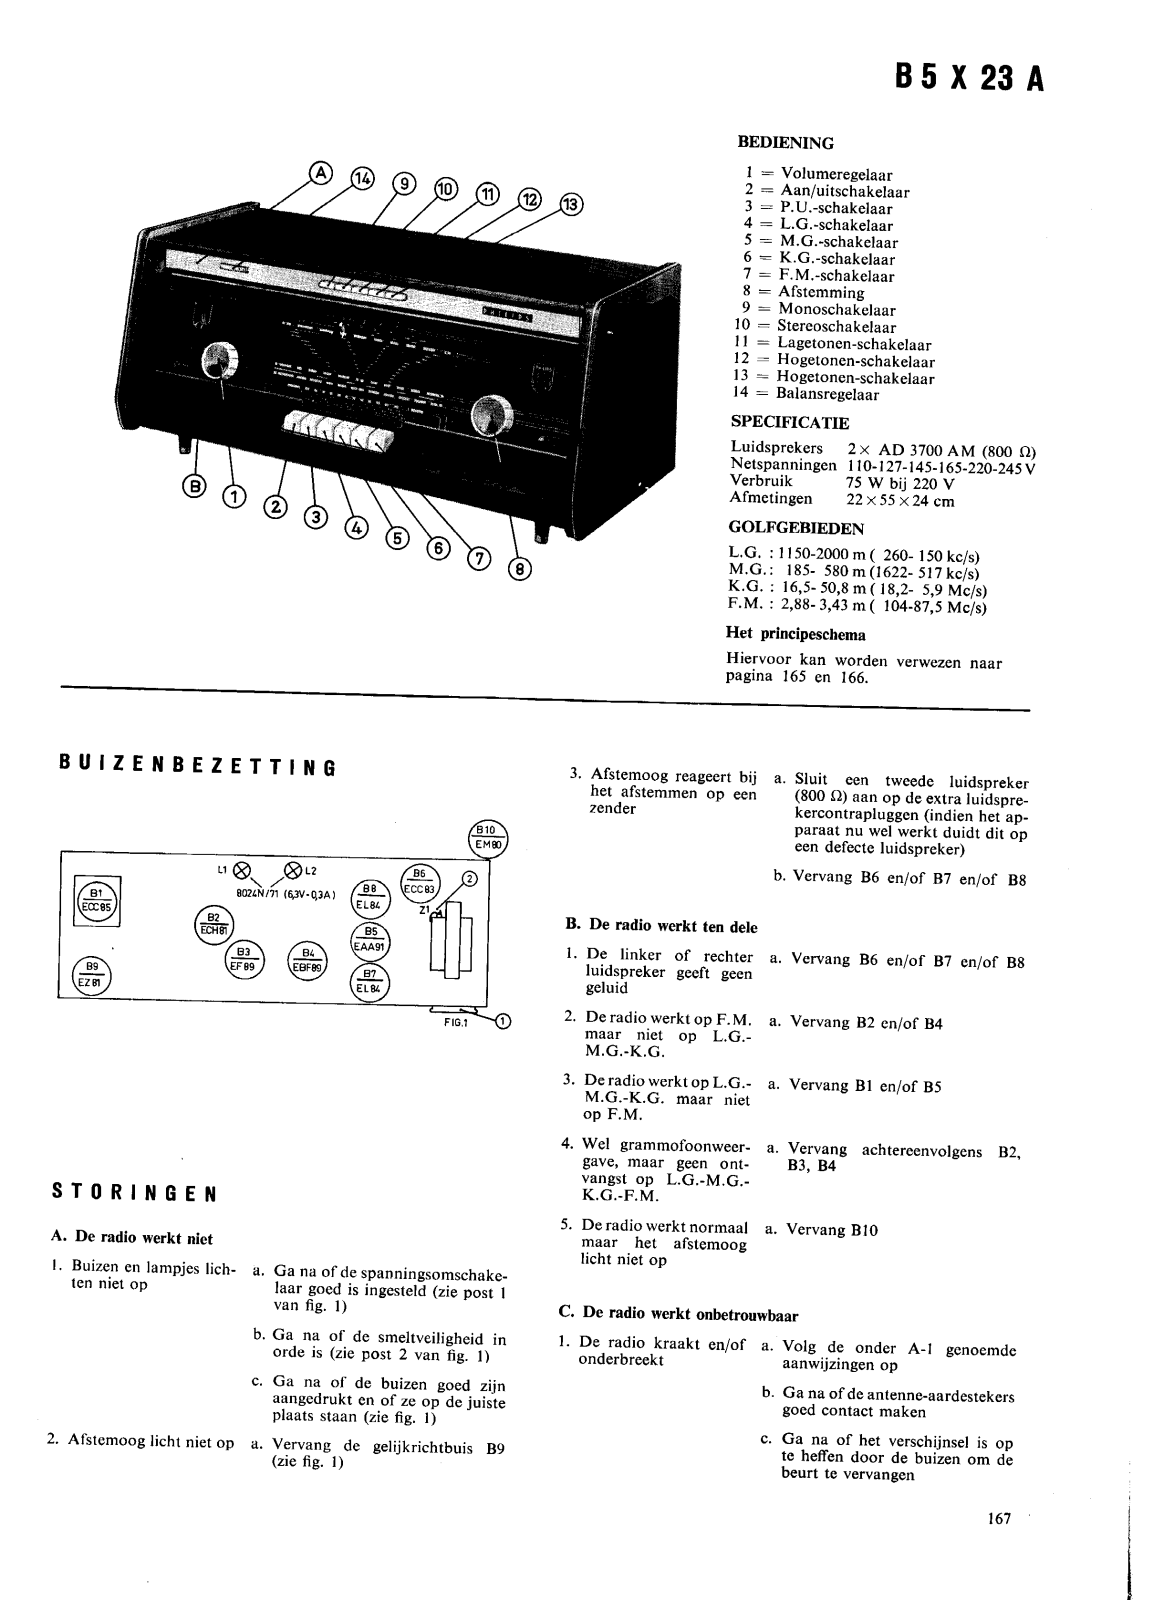 Philips B-5-X-23-A Service Manual